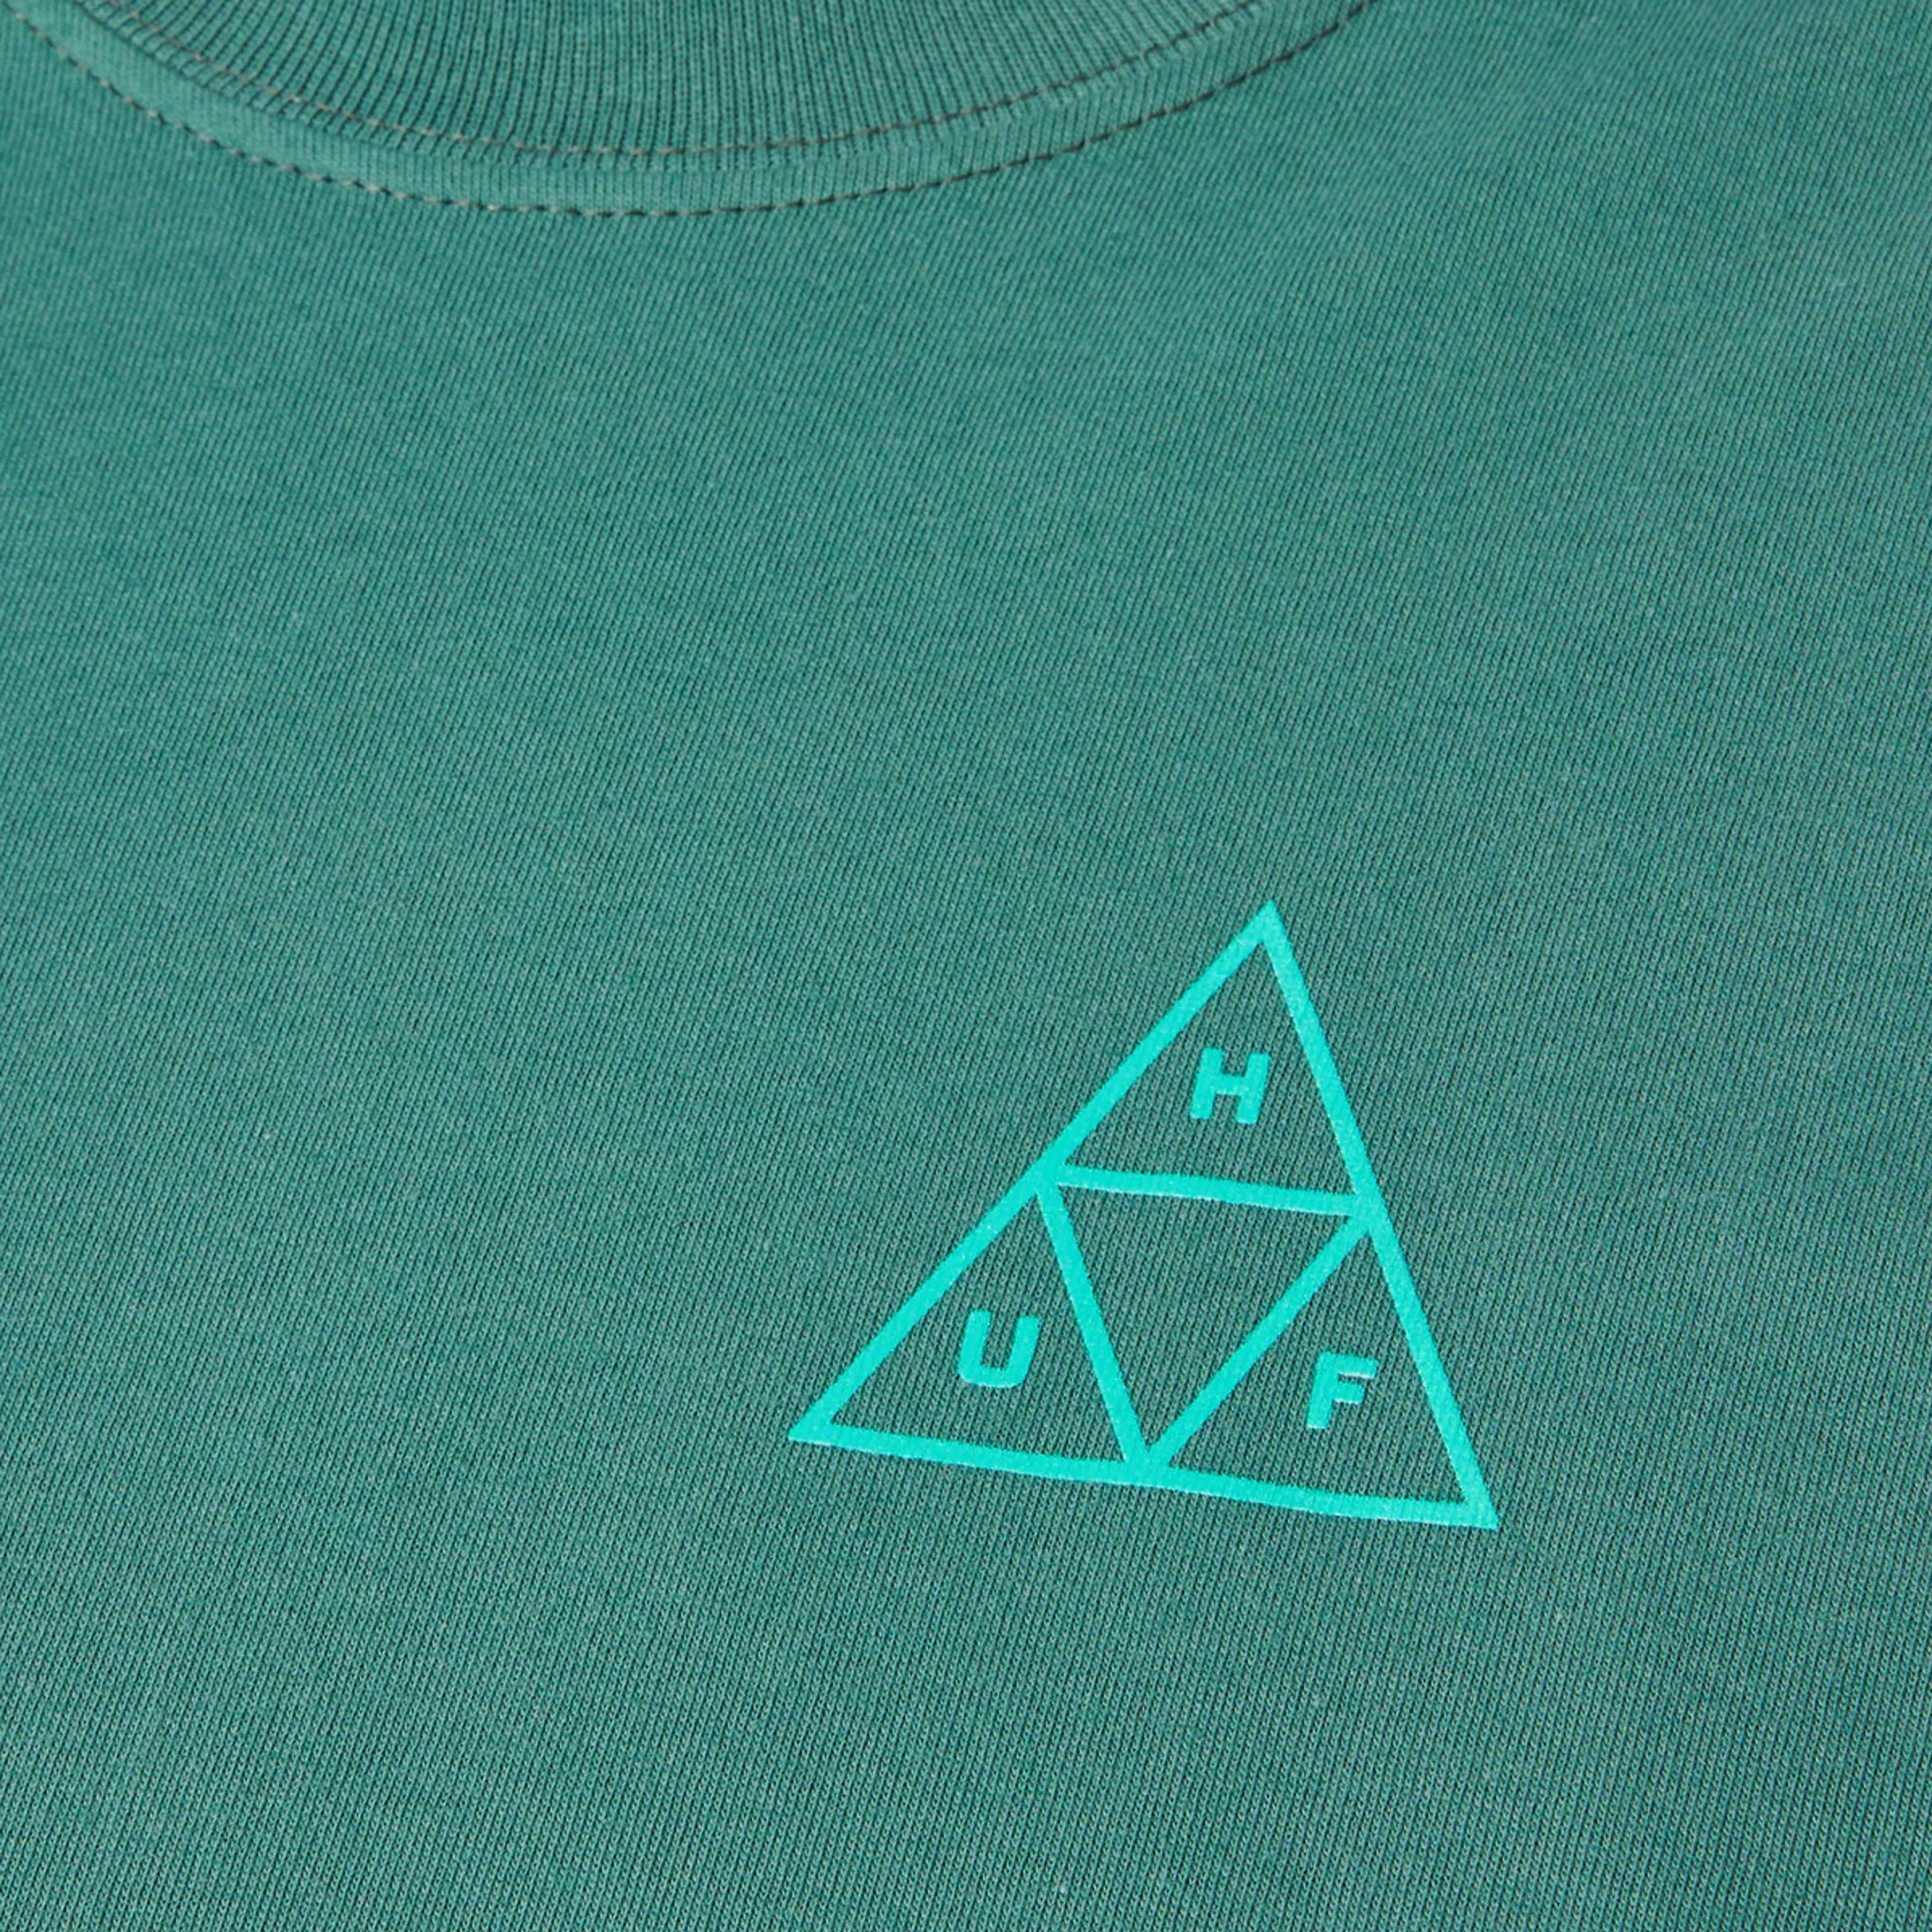 Huf Set Triple Triangle Long Sleeve T-Shirt Pine